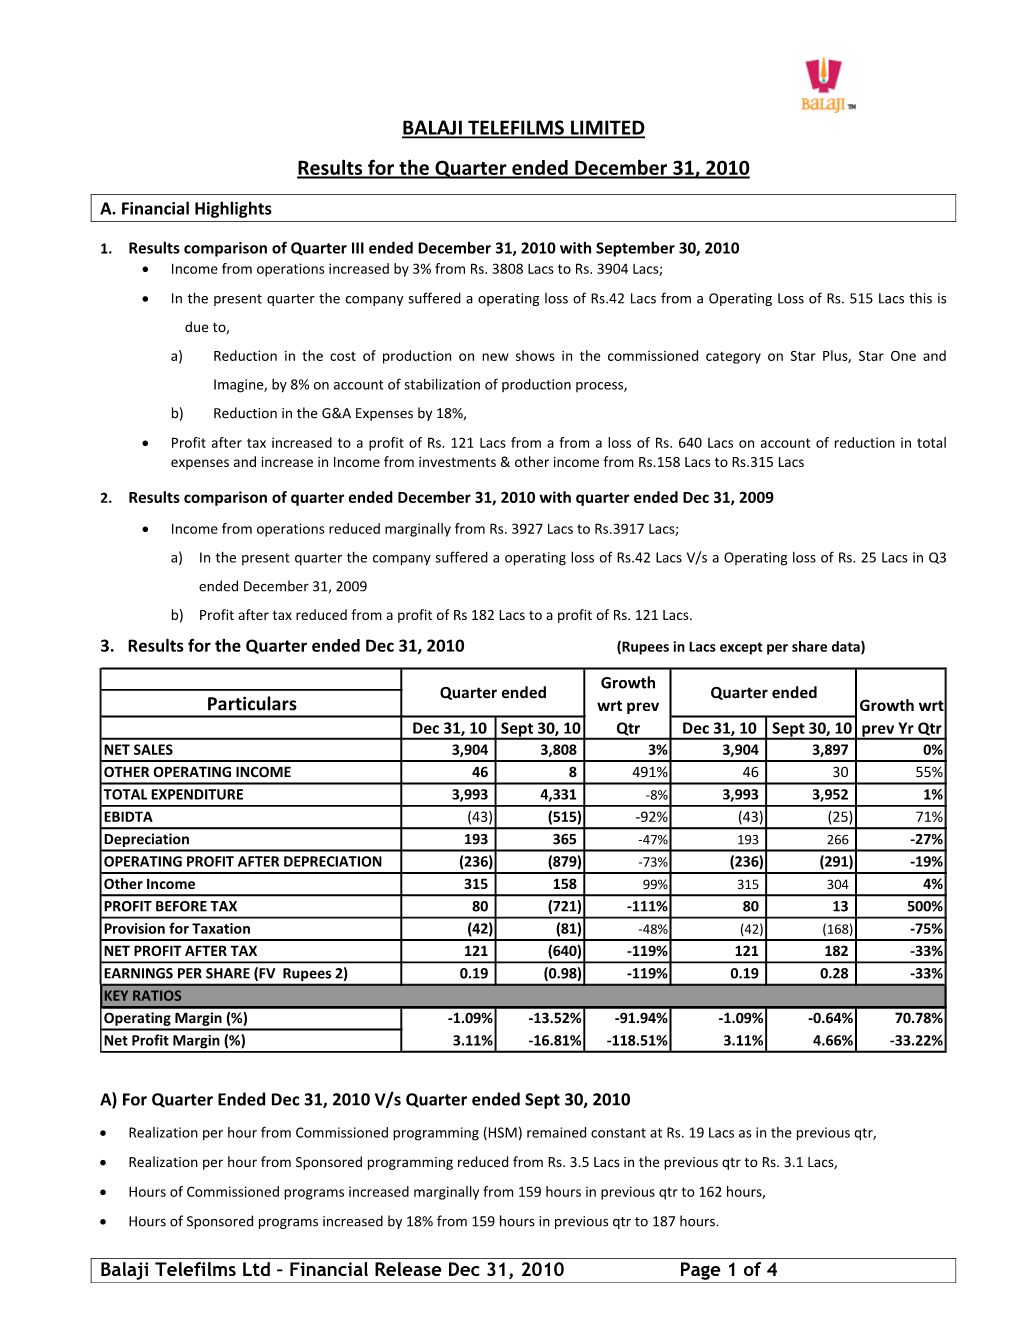 BALAJI TELEFILMS LIMITED Results for the Quarter Ended December 31, 2010